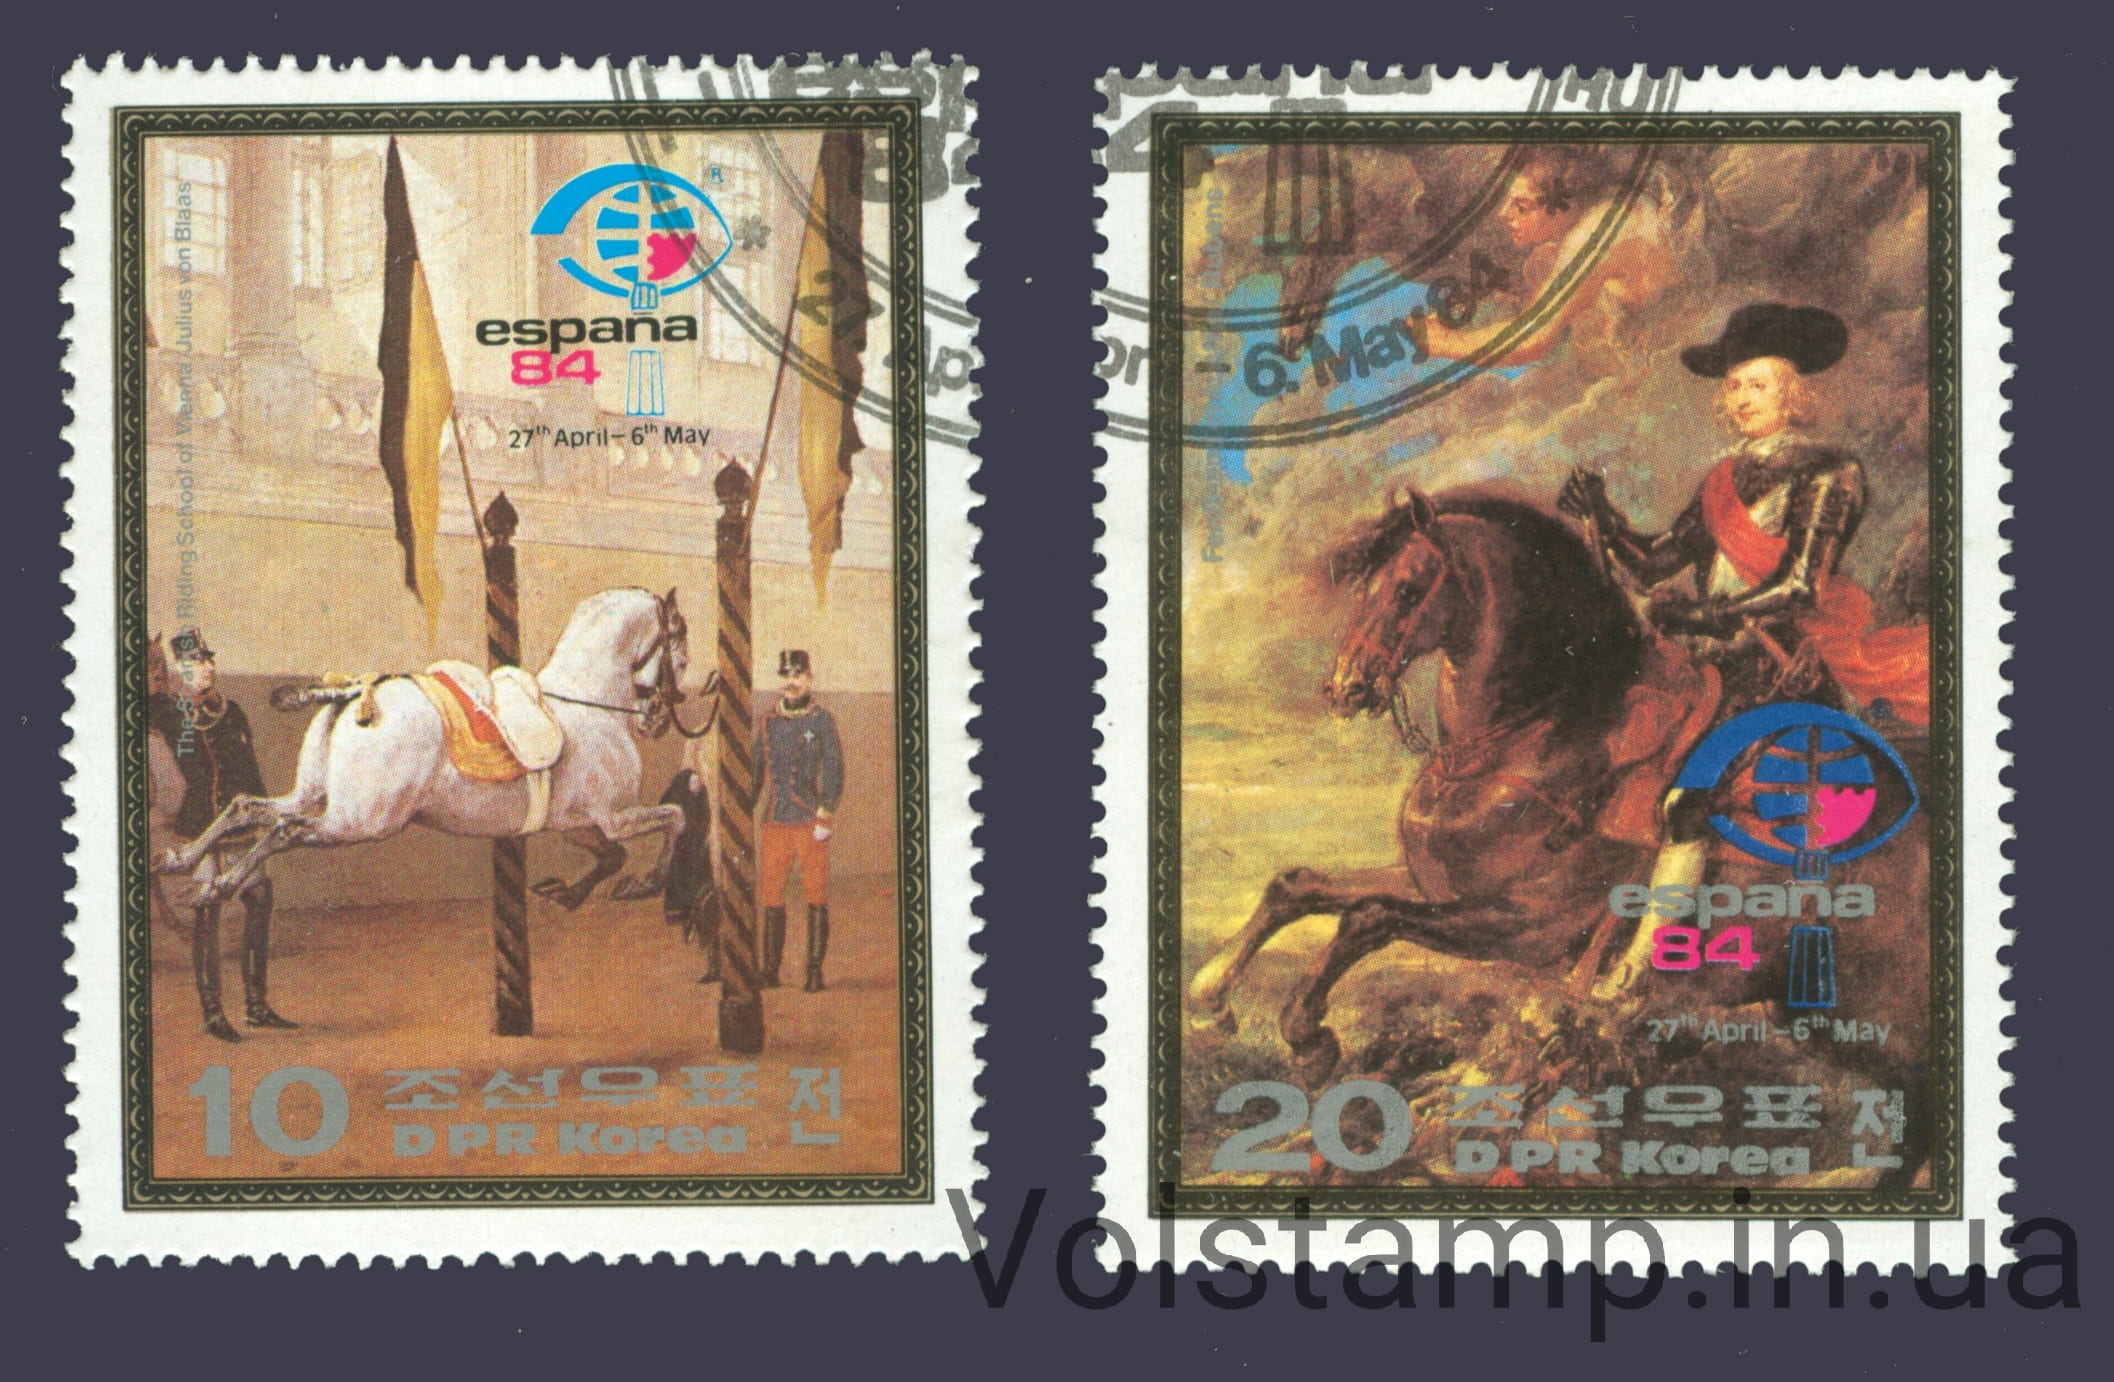 1984 North Korea stamp Series (painting, horses) Used №2448-2449